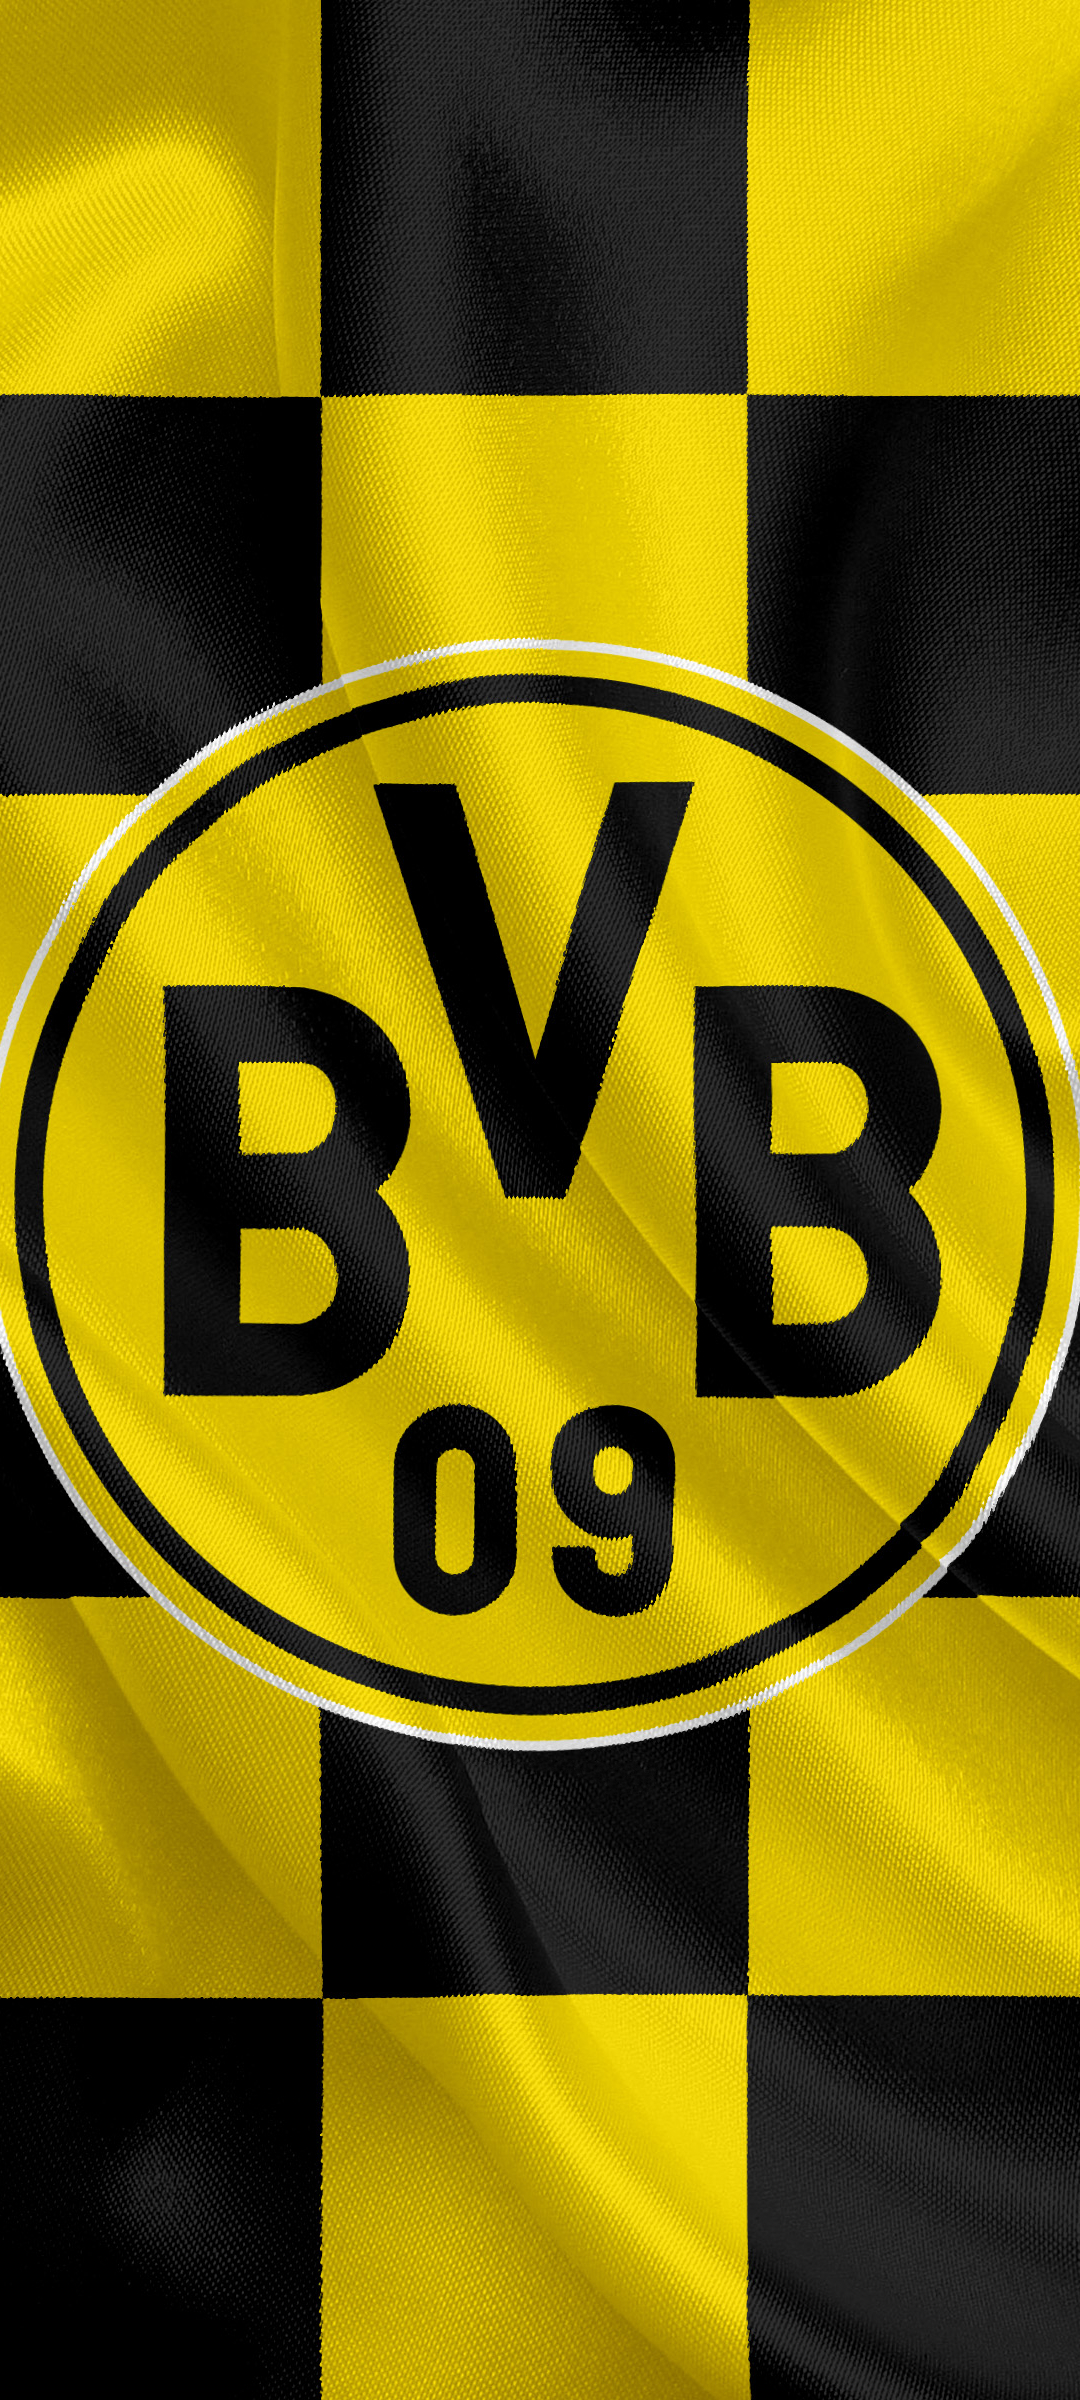 Descarga gratuita de fondo de pantalla para móvil de Fútbol, Logo, Emblema, Deporte, Bvb, Borussia Dortmund.